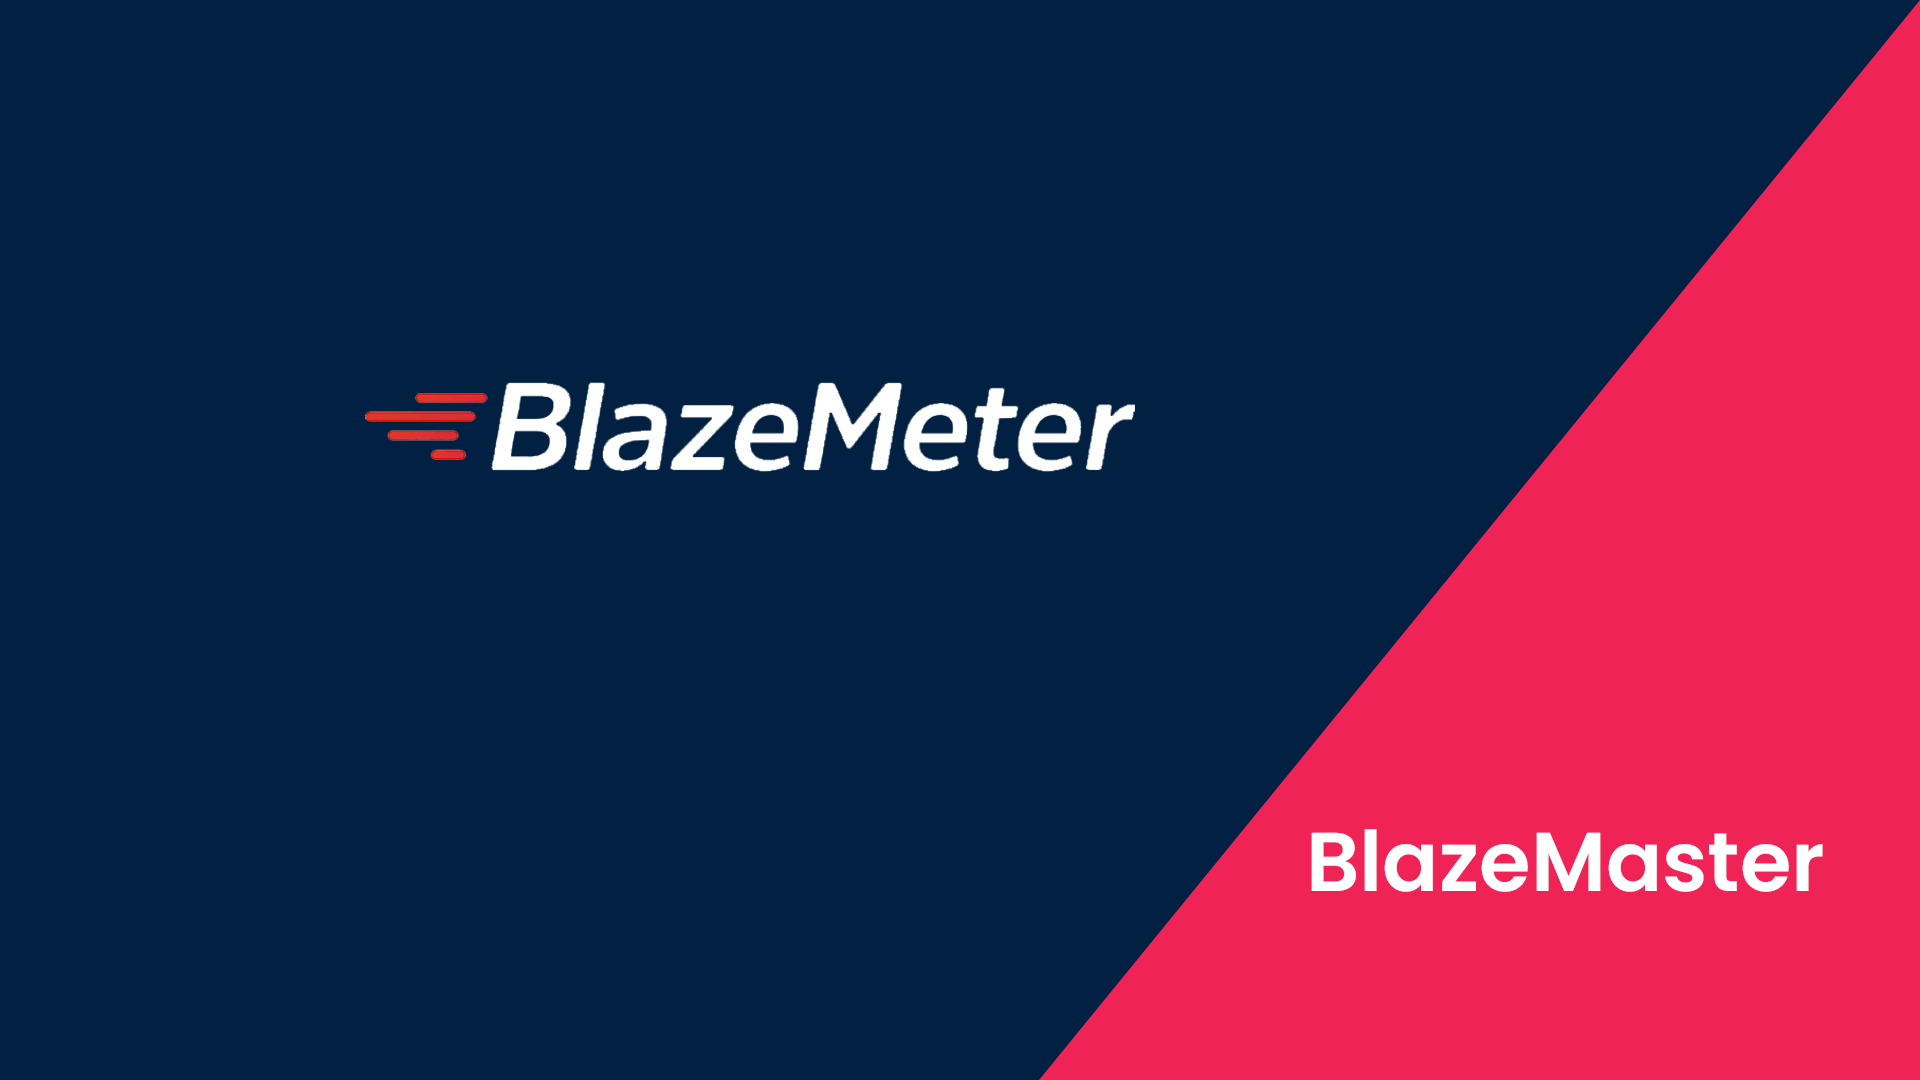 BlazeMeter